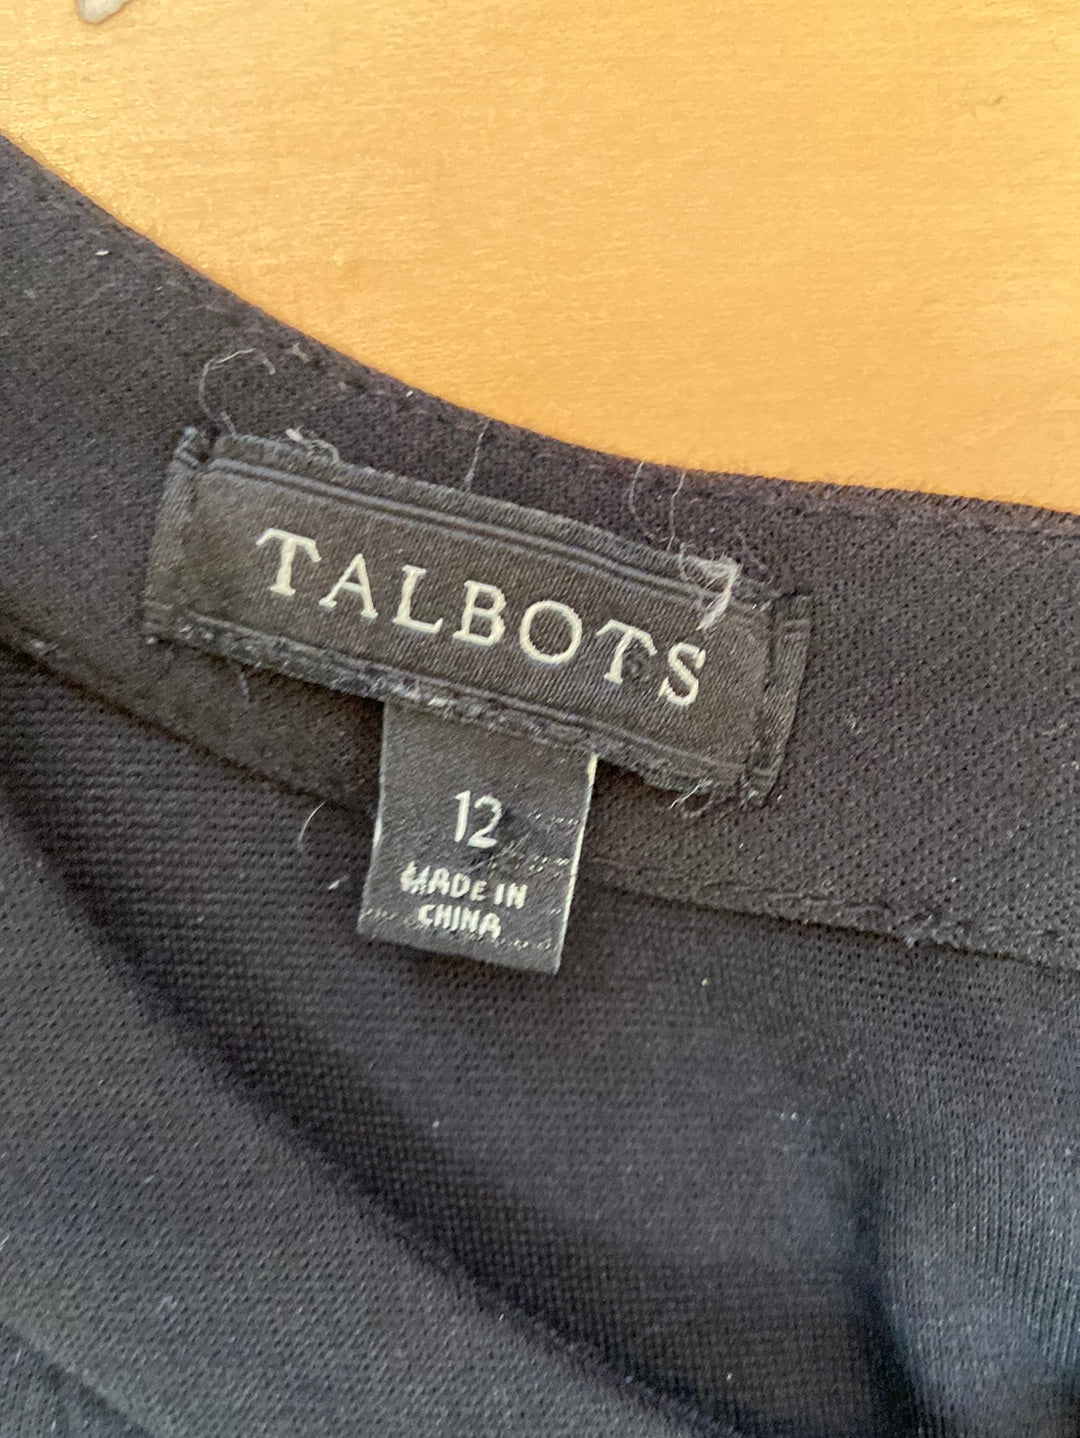 BLACK BASIC Talbots Size 12